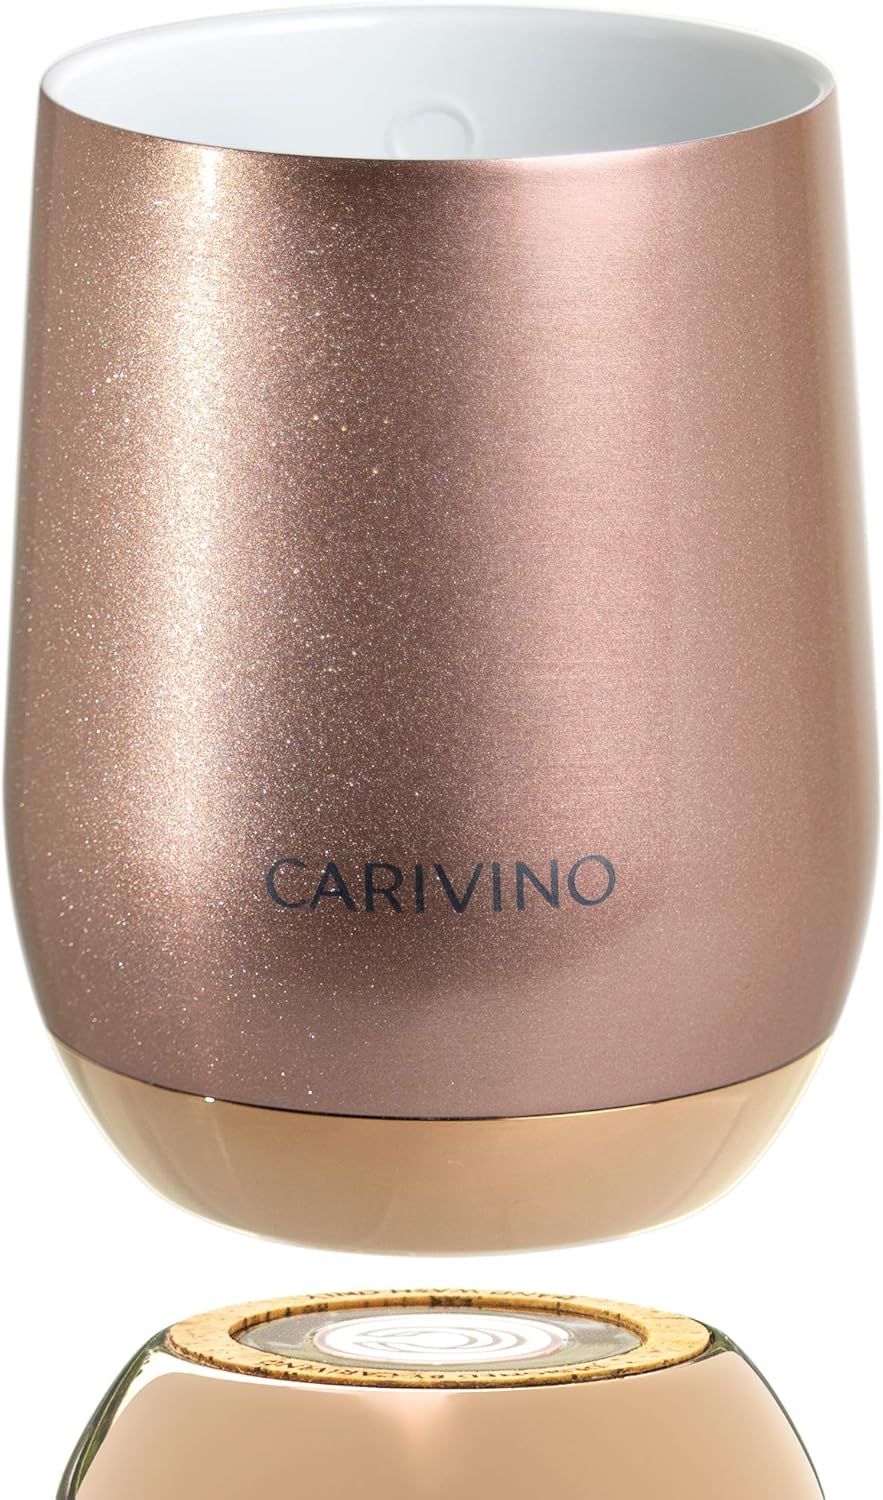 CARIVINO: Luxury Wine Tumbler with Genuine Cork Base and Ceramic Interior (No Metal Taste) – Pr... | Amazon (US)